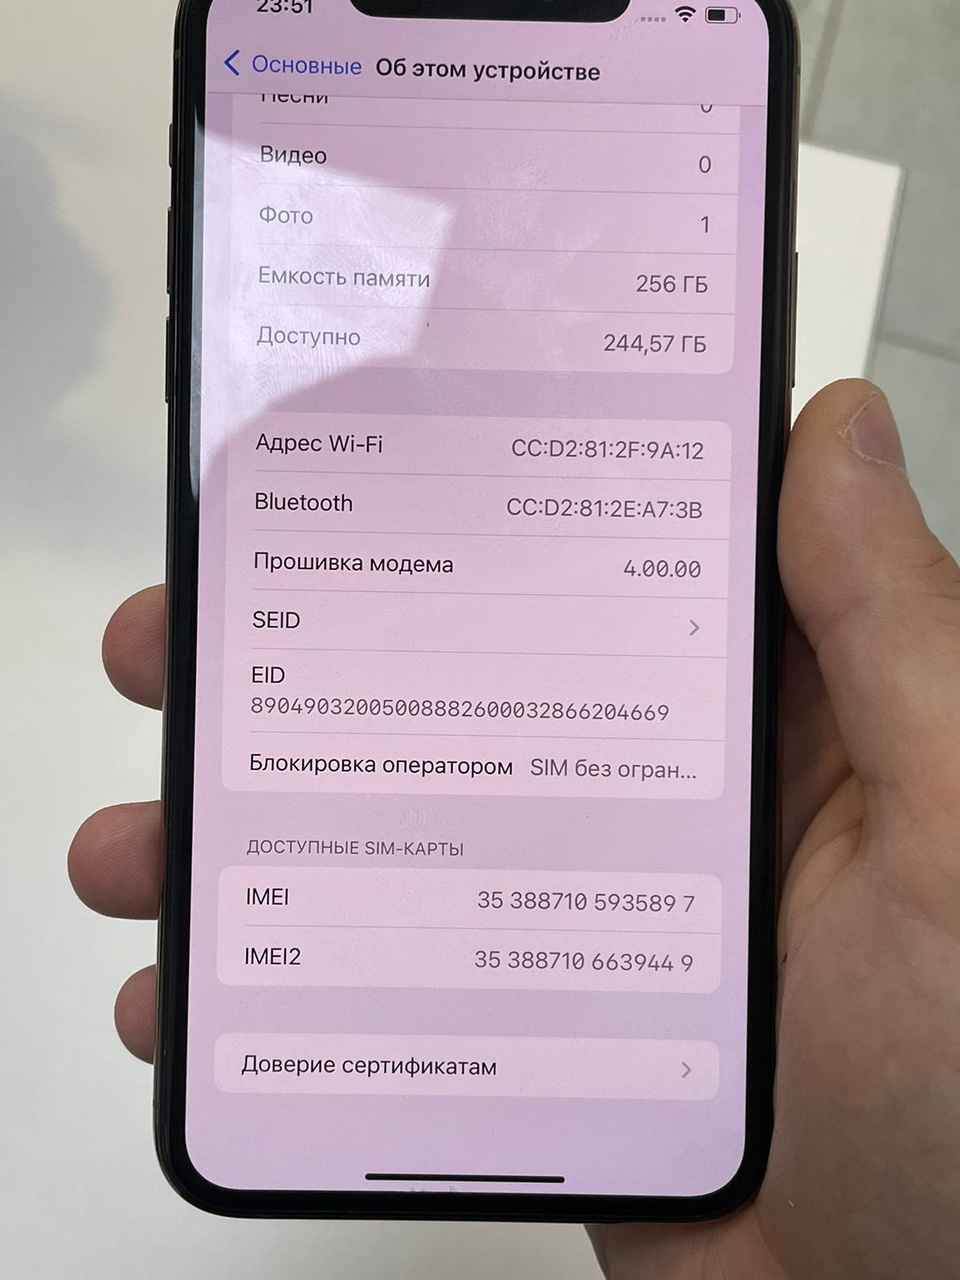 IPhone 11 Pro Max на 256 Gb Золотой (Б/у) - 34 000 ₽, заказать онлайн.